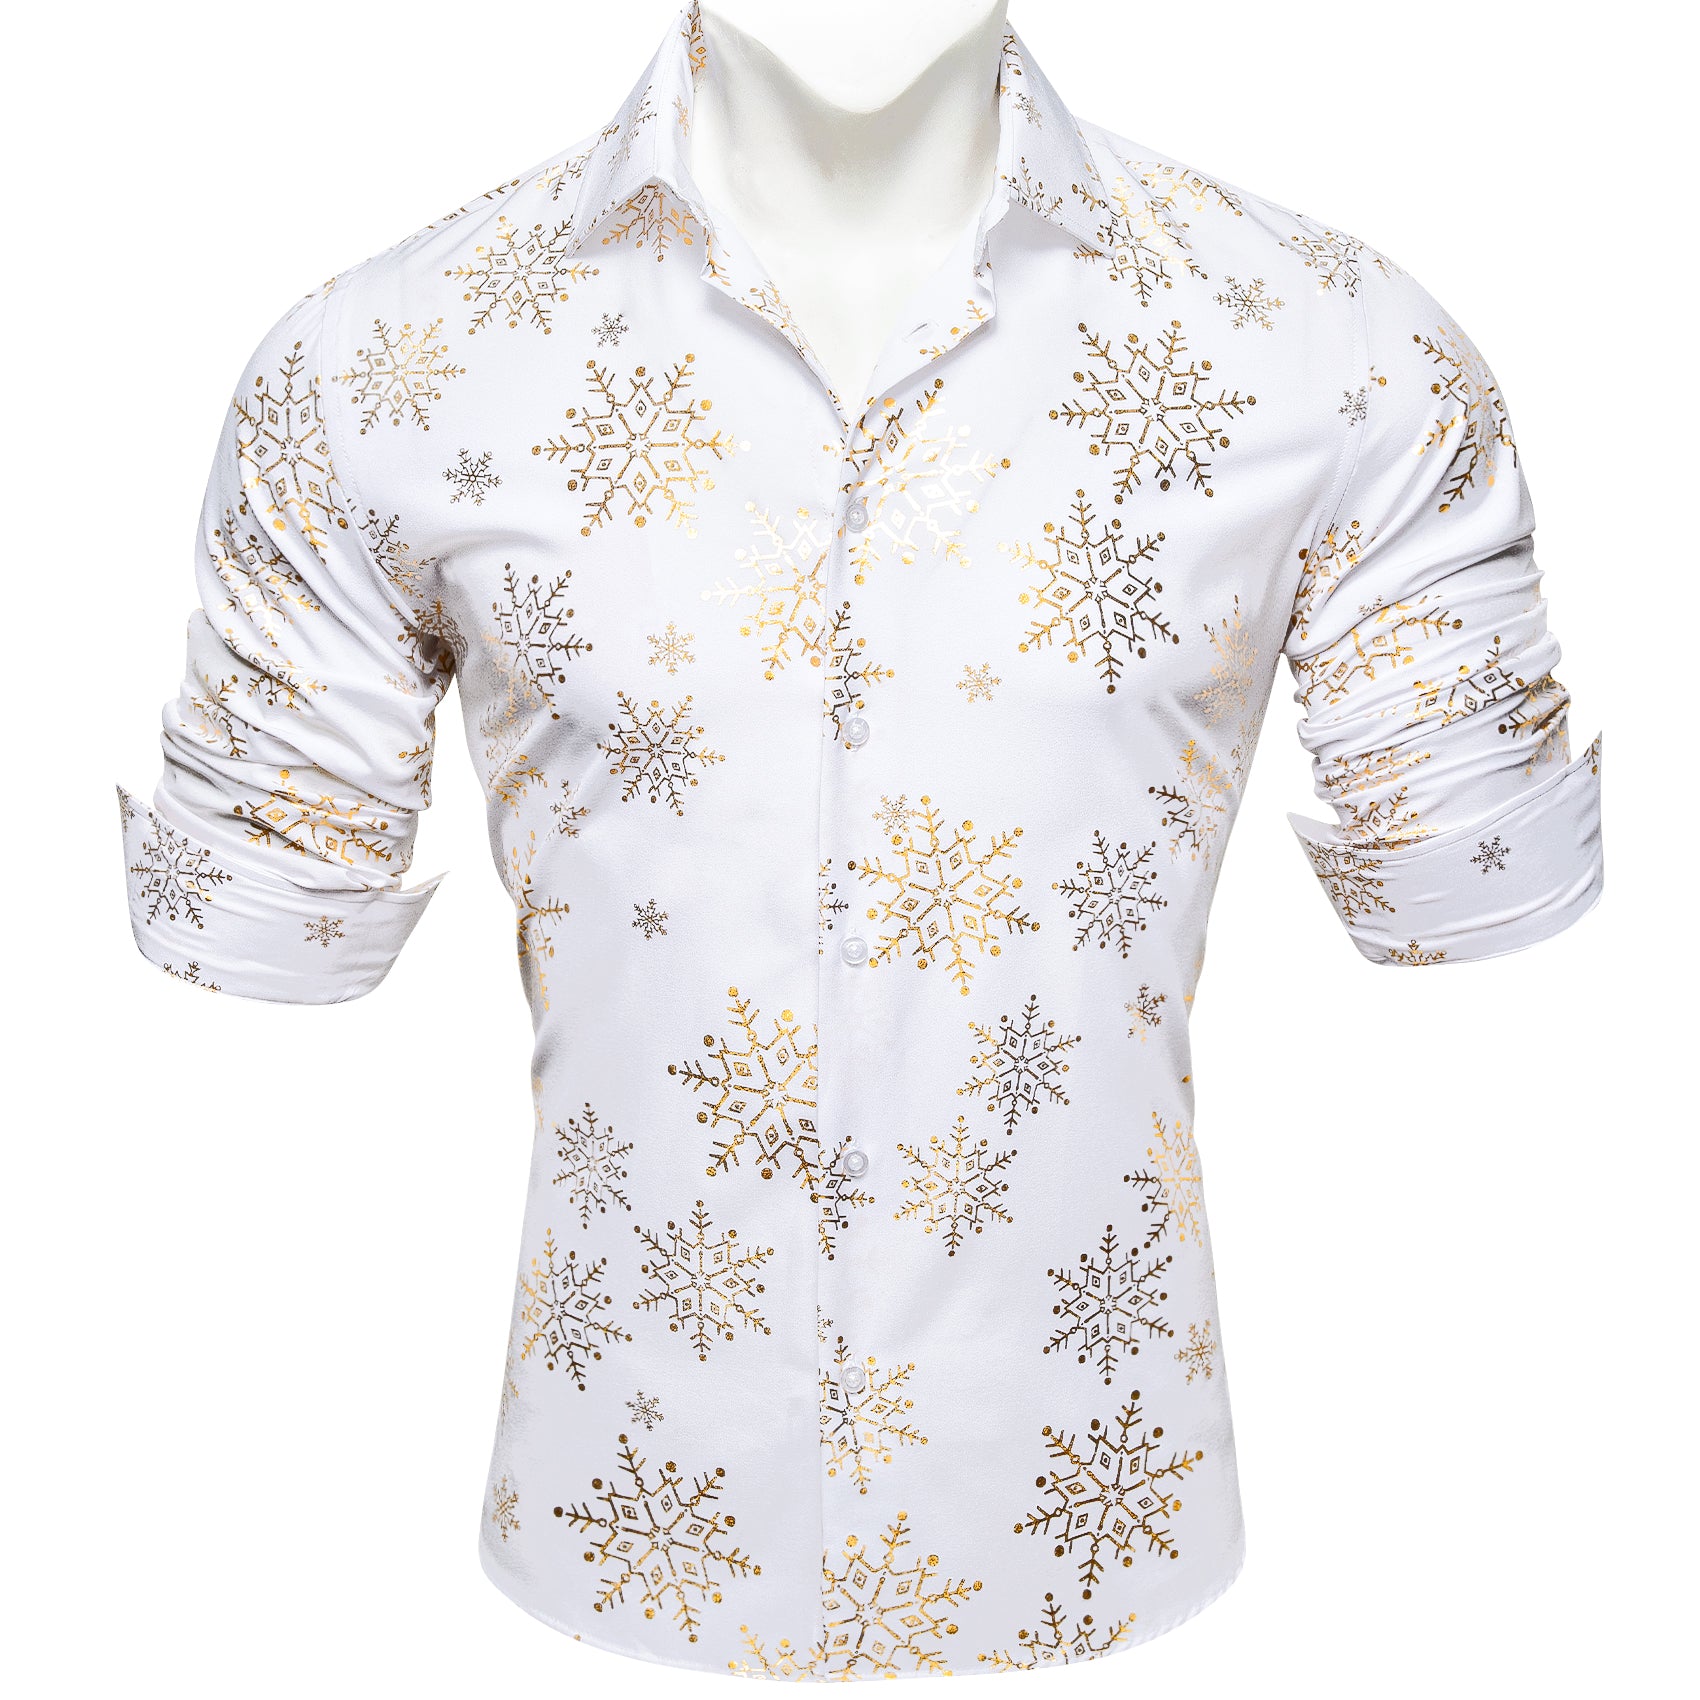 Barry.wang Christmas White Gold Snowflake Floral Silk Shirt